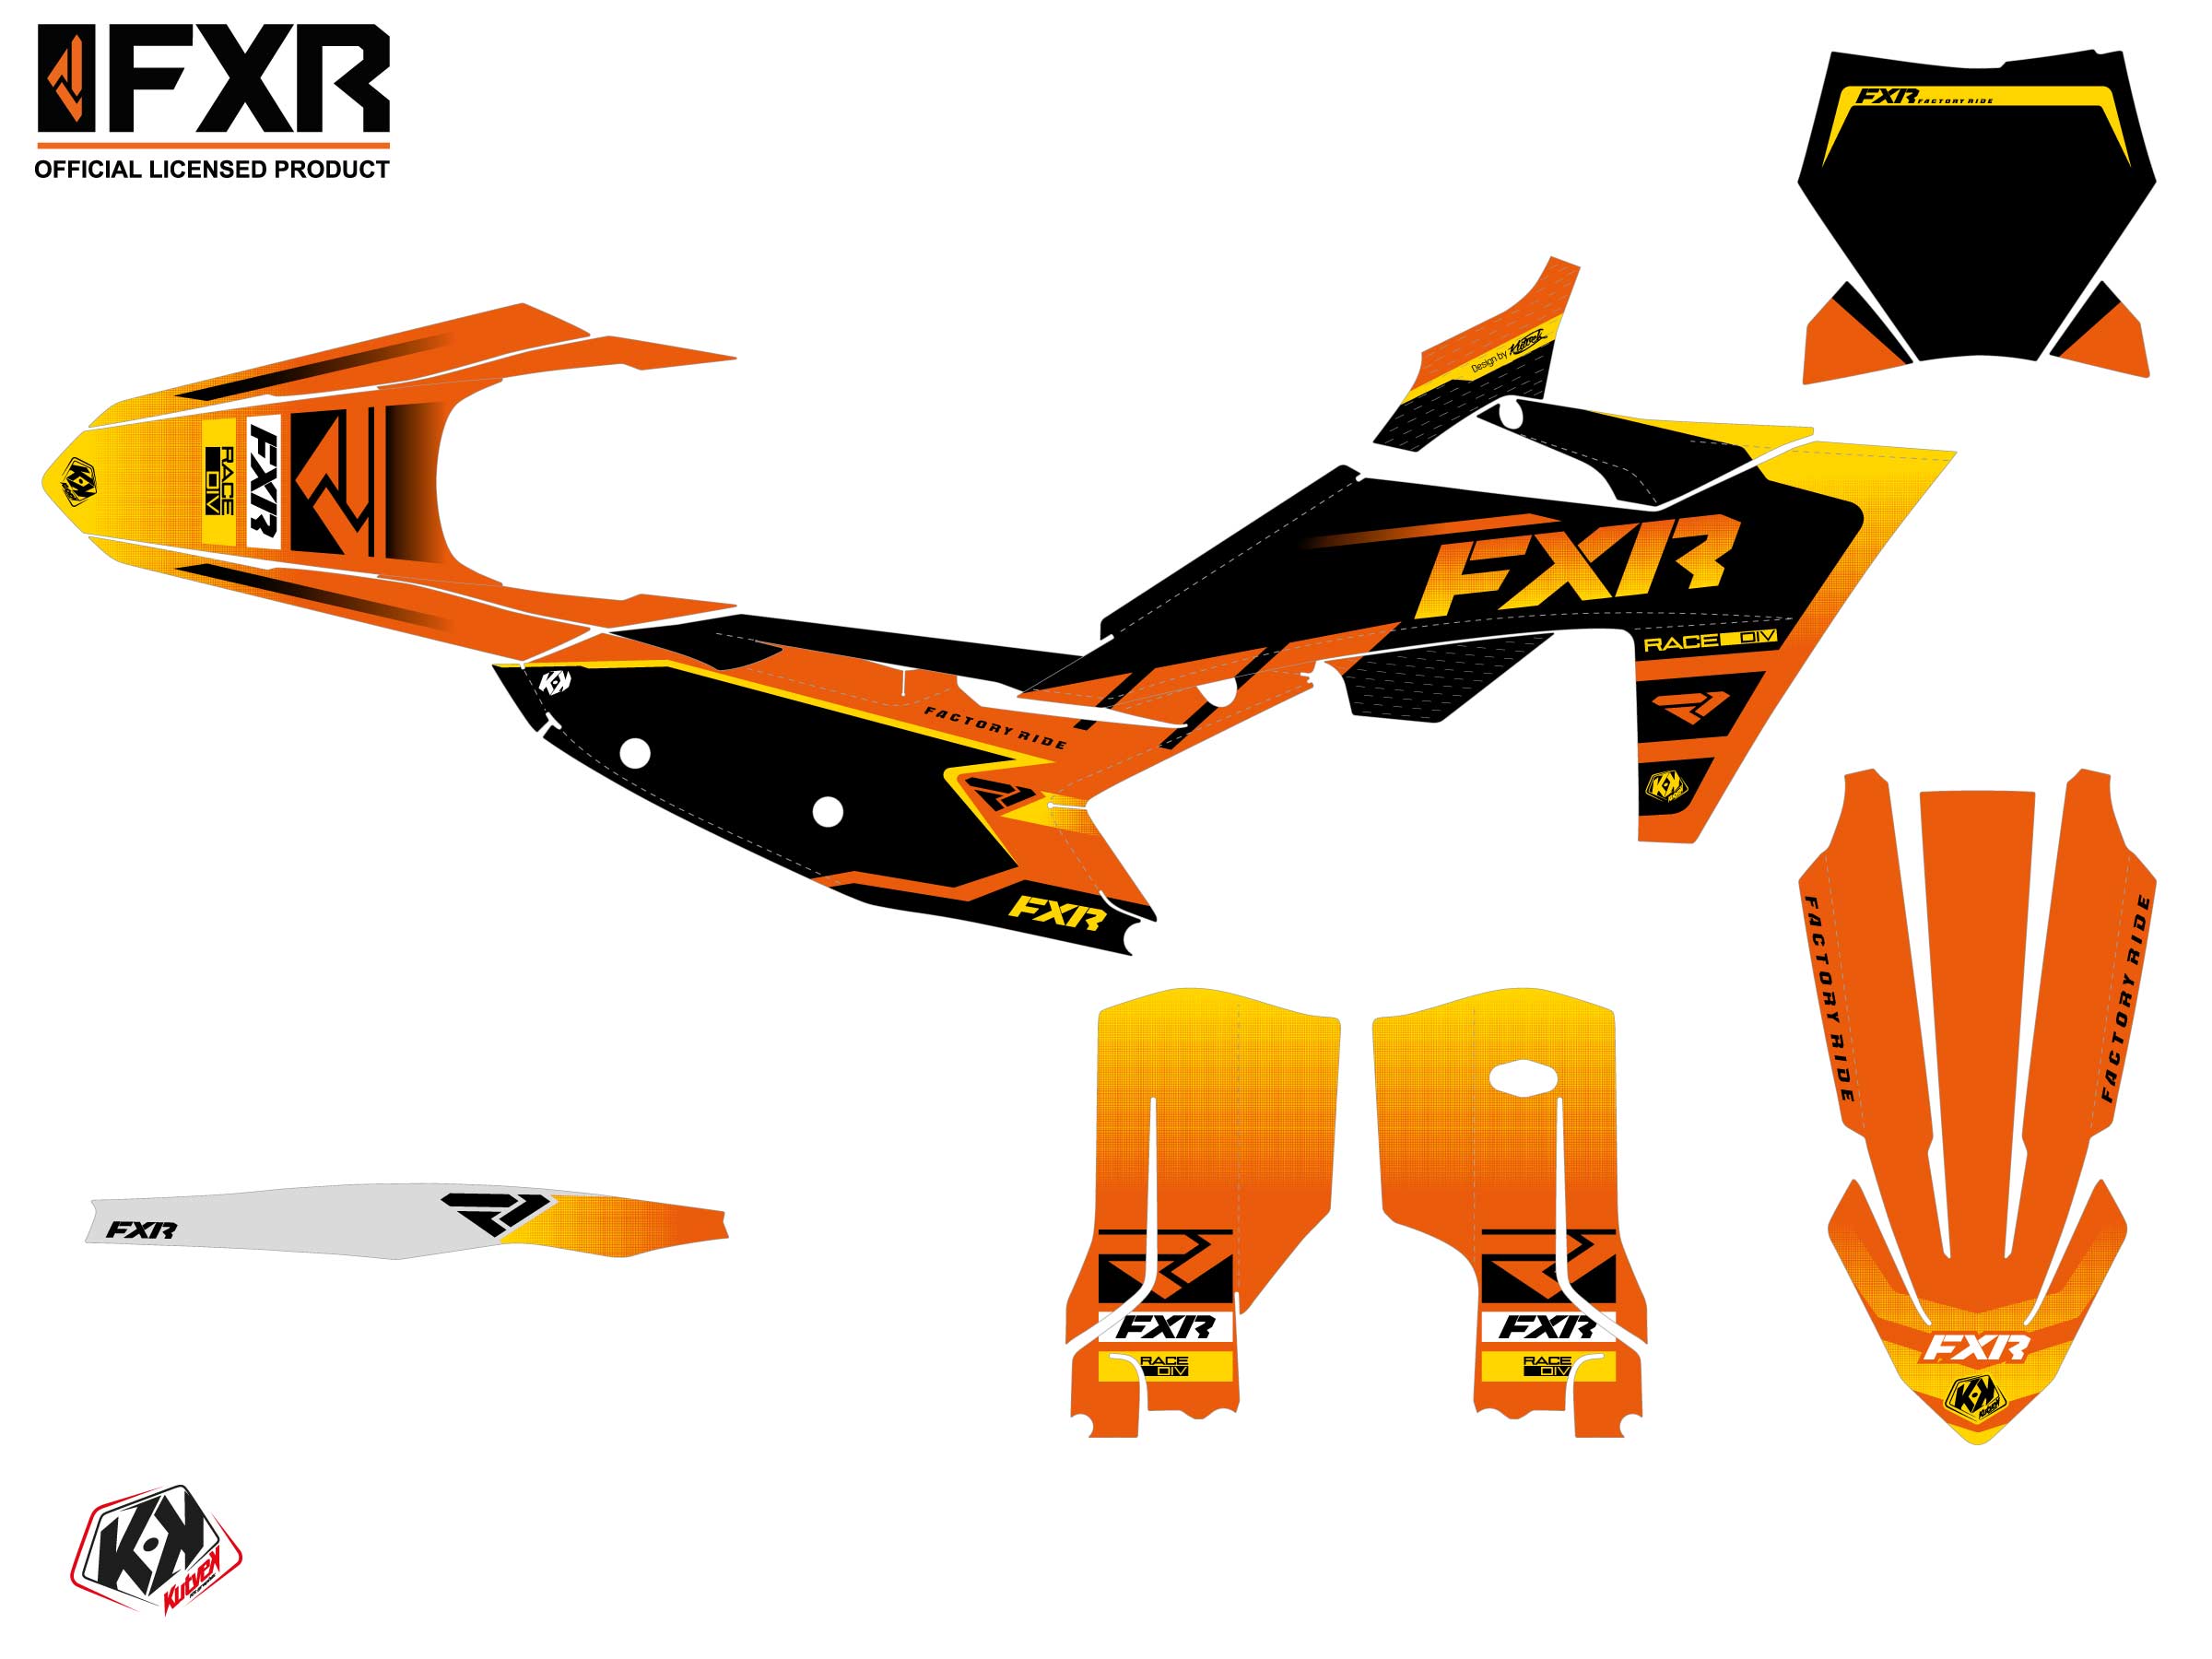 Ktm Sx 250 F Dirt Bike Fxr Revo Graphic Kit Orange